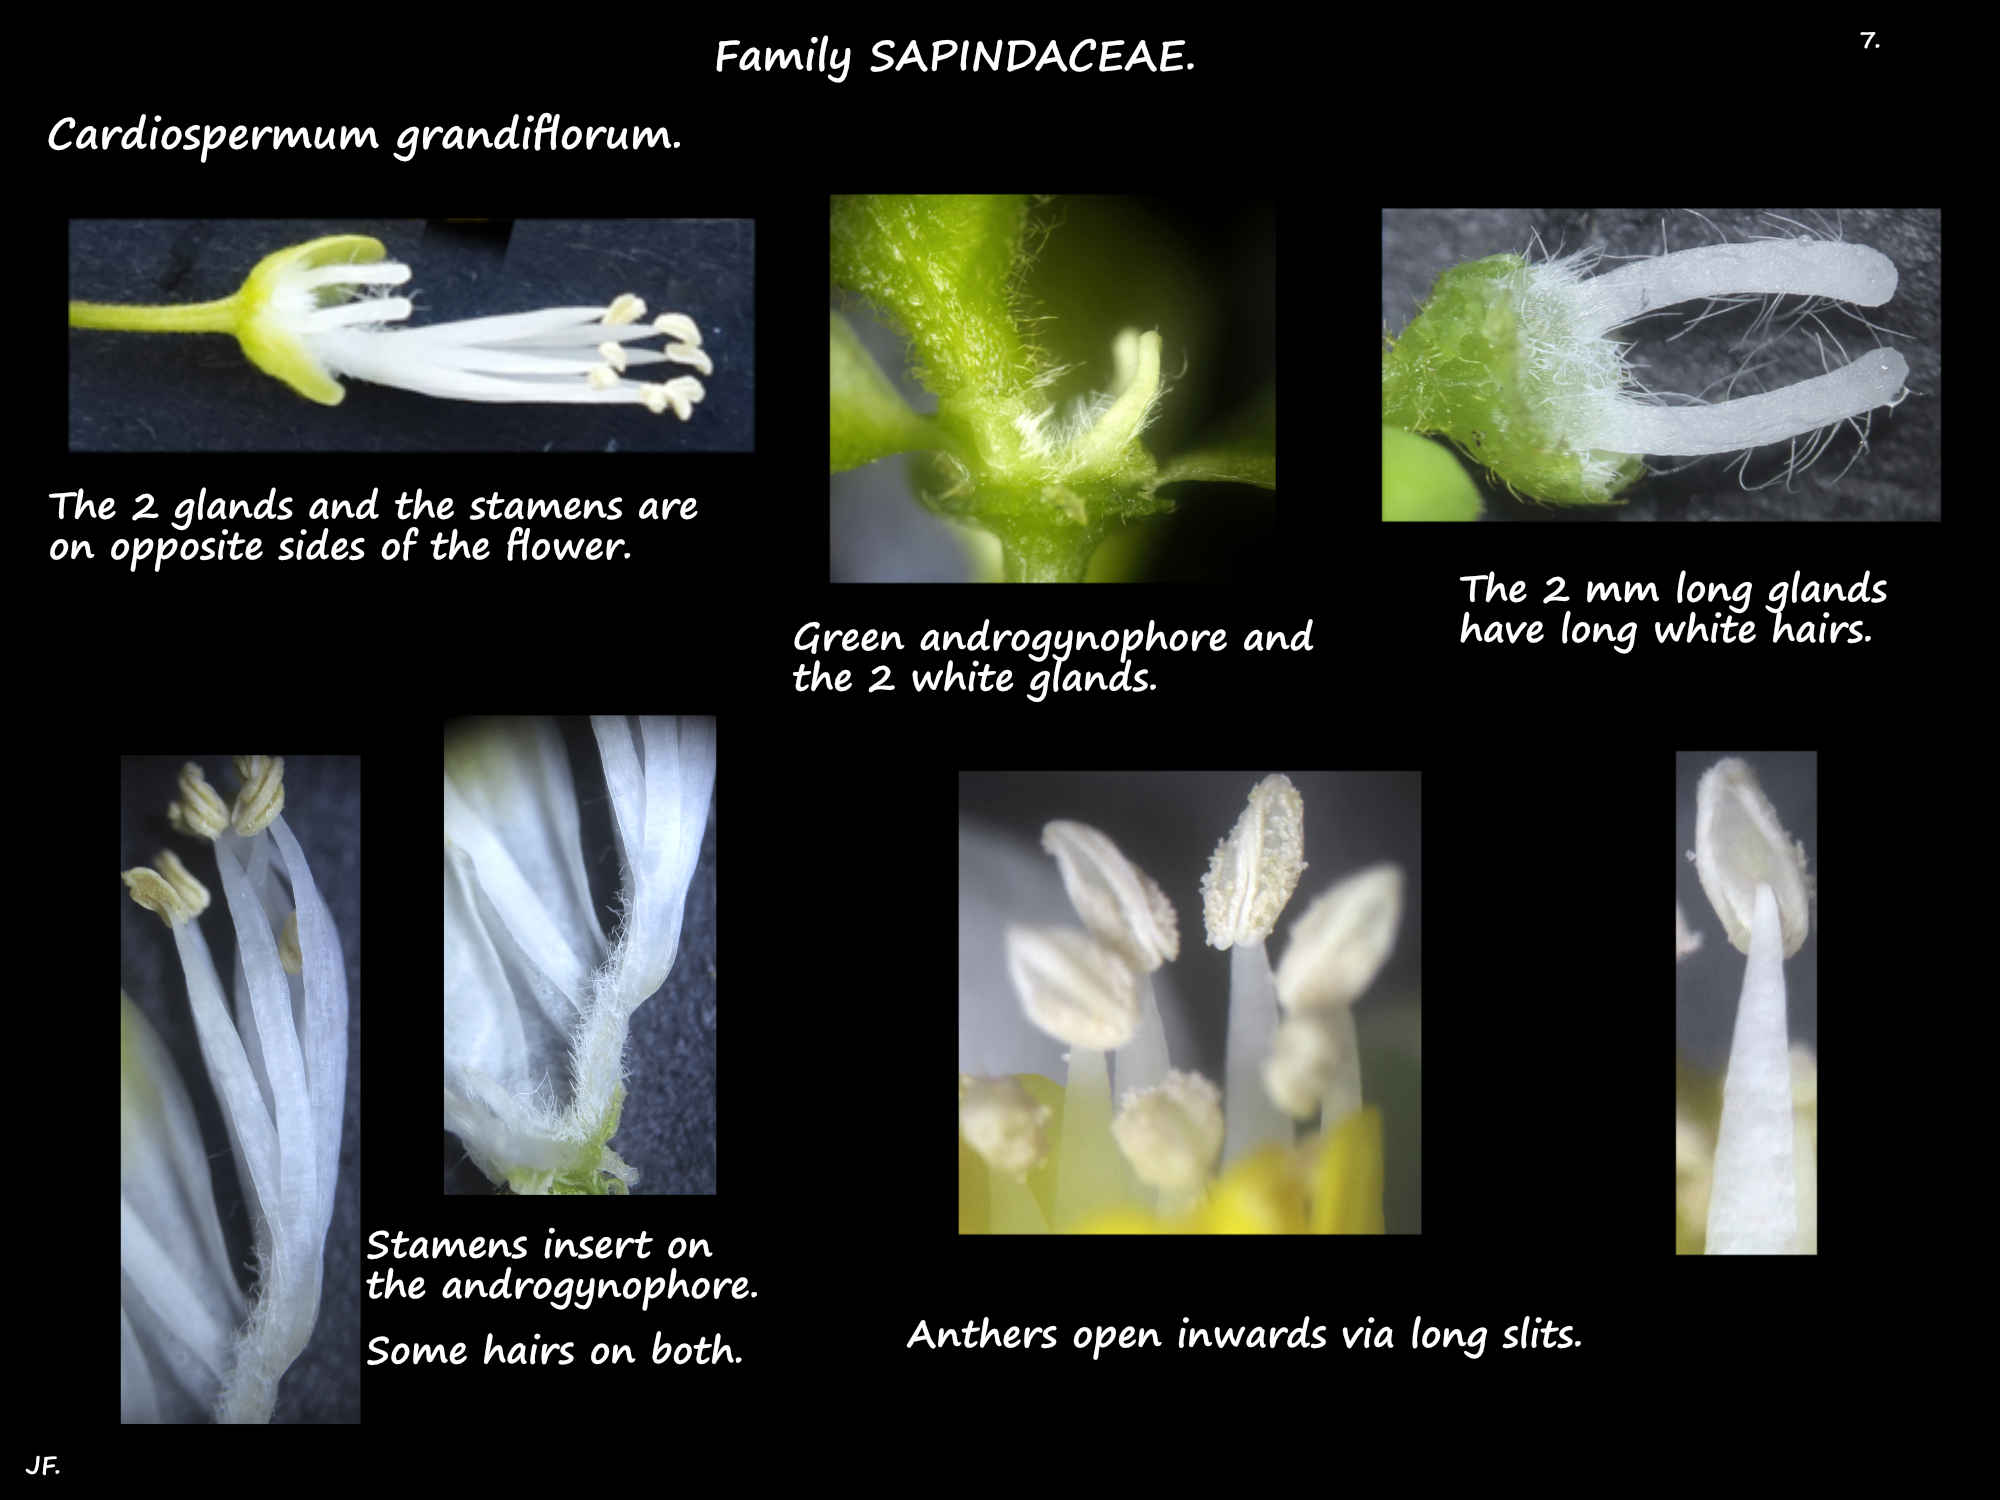 7 Cardiospermum androgynophore, glands & stamens